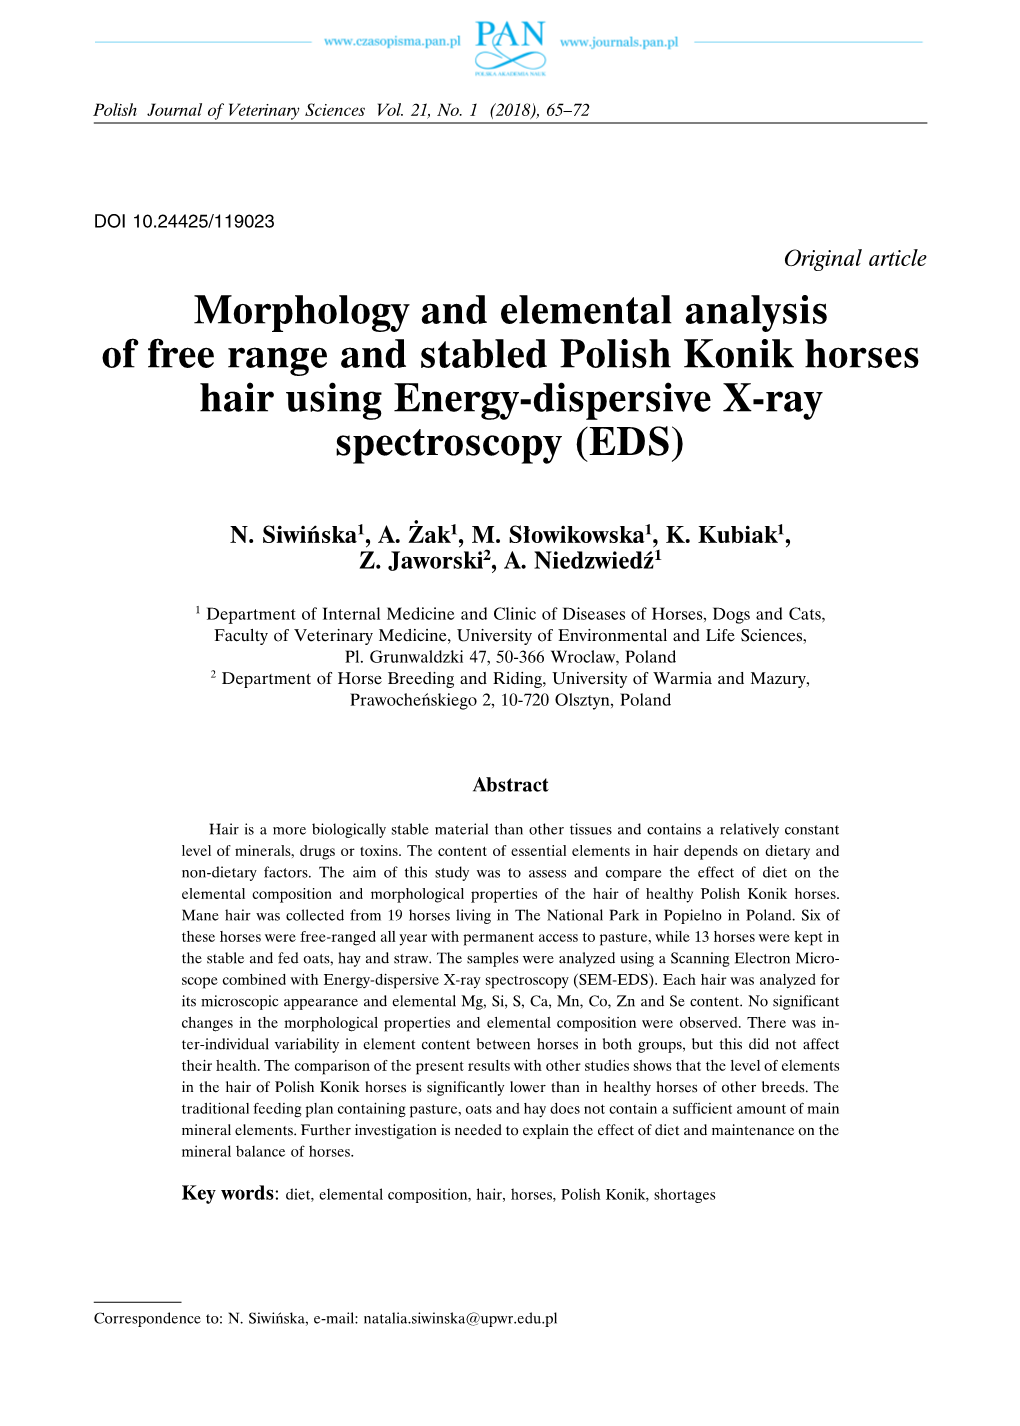 Morphology and Elemental Analysis of Free Range and Stabled Polish Konik Horses Hair Using Energy-Dispersive X-Ray Spectroscopy (EDS)